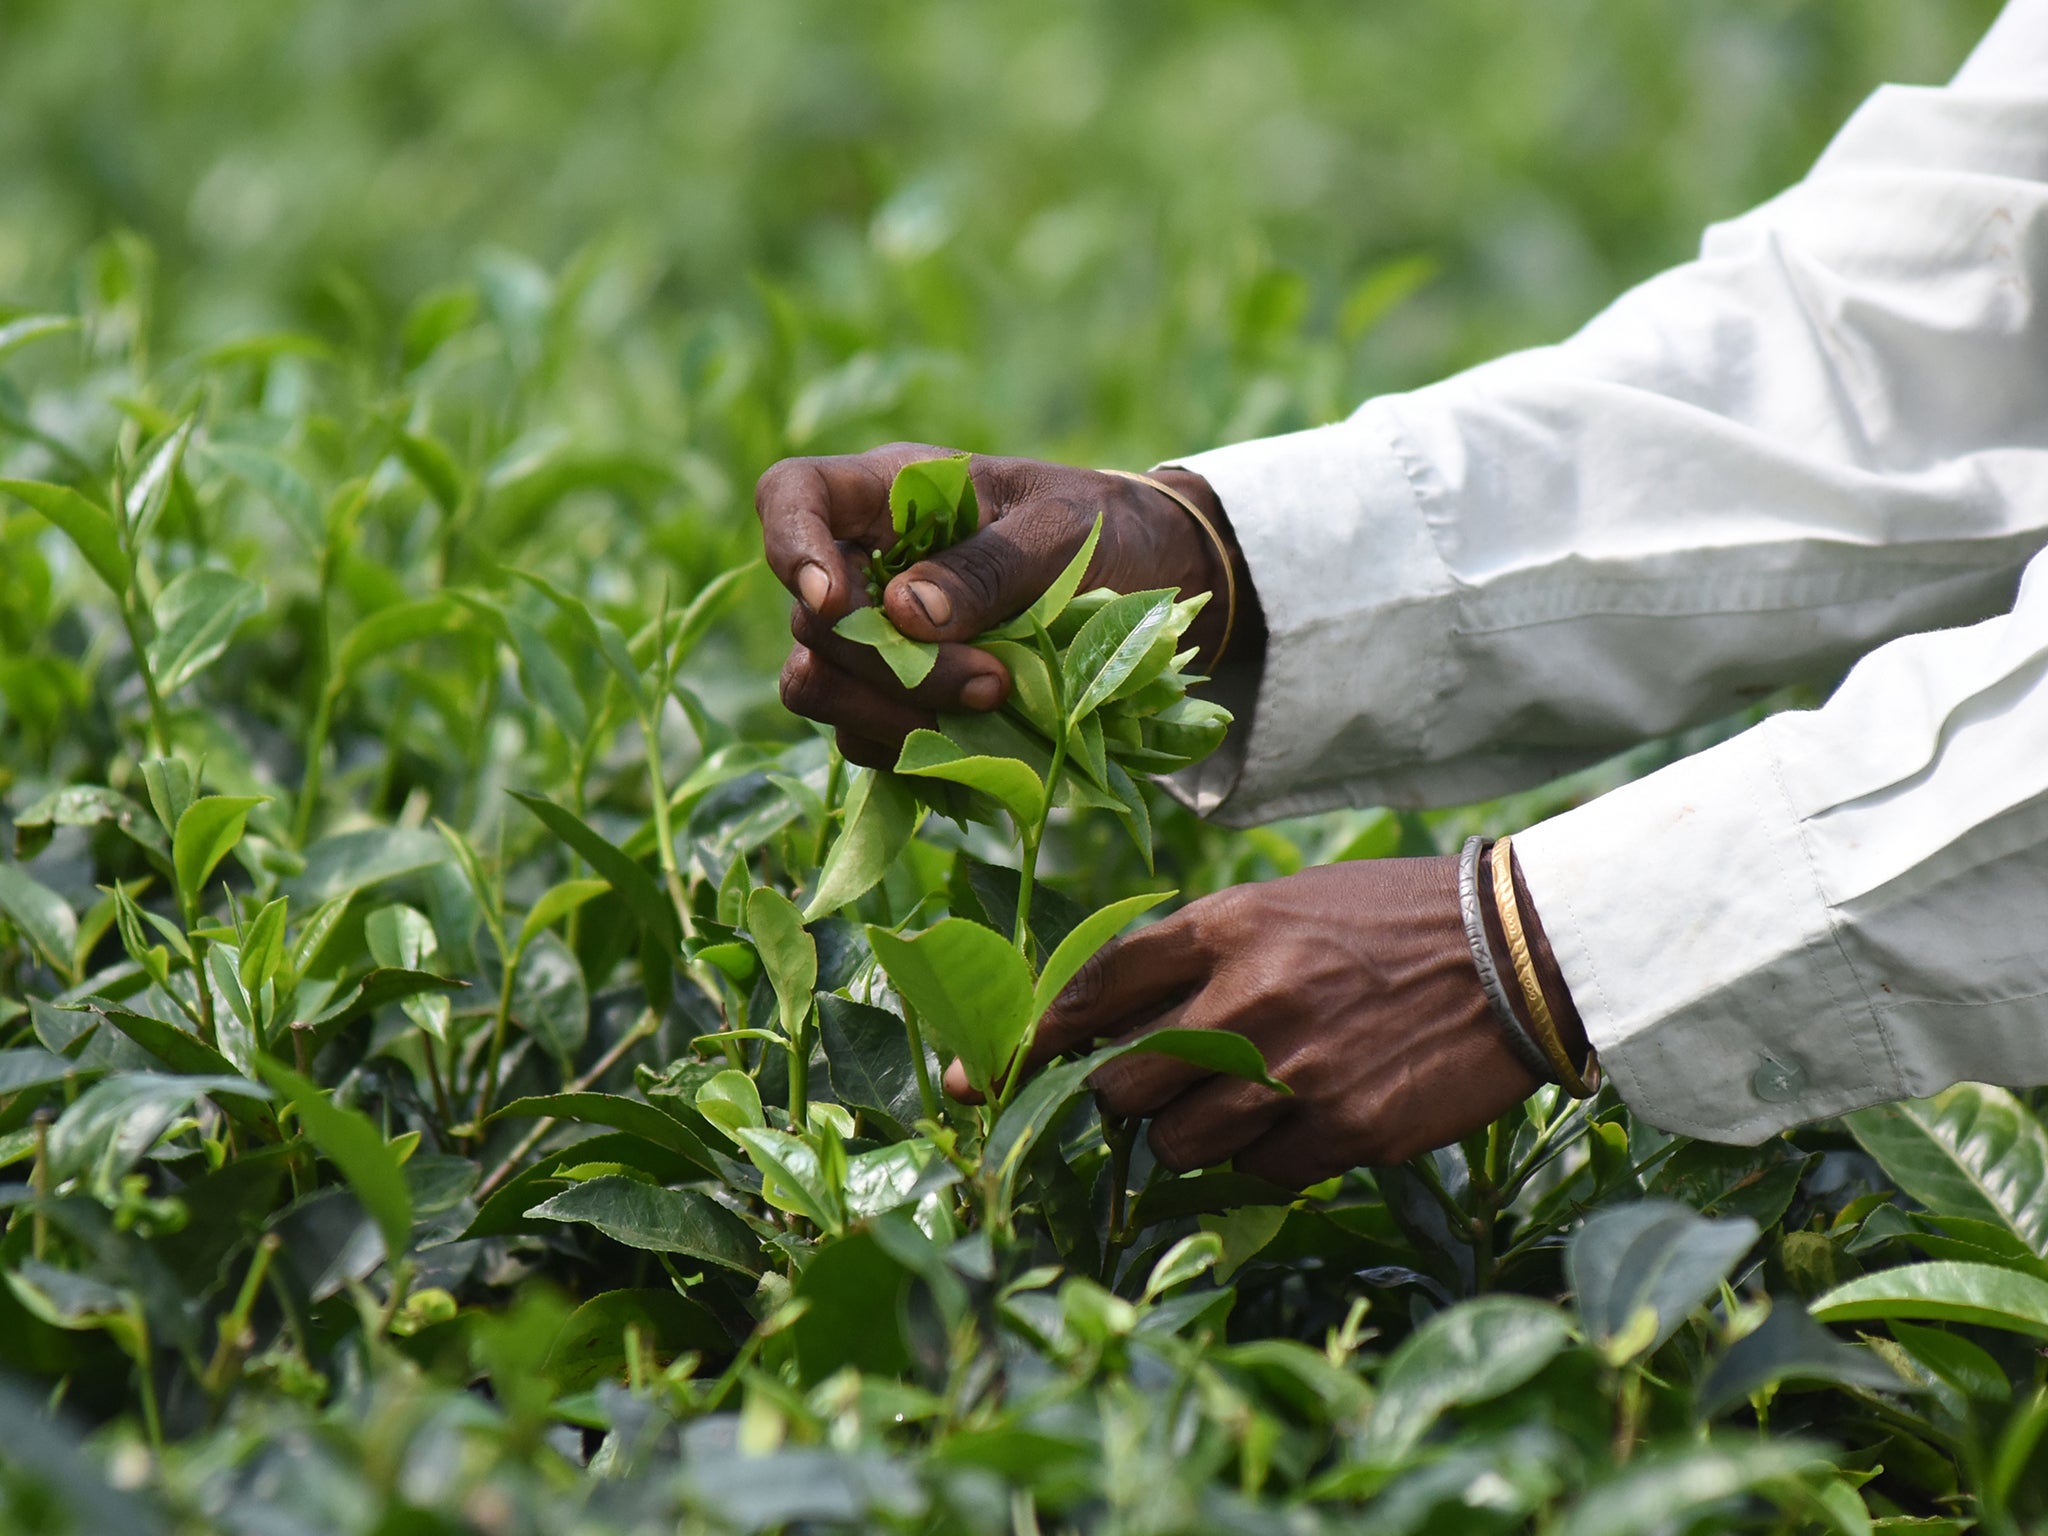 An Indian tea plantation worker picks leaves in a tea garden in Kaziranga, east of Guwahati